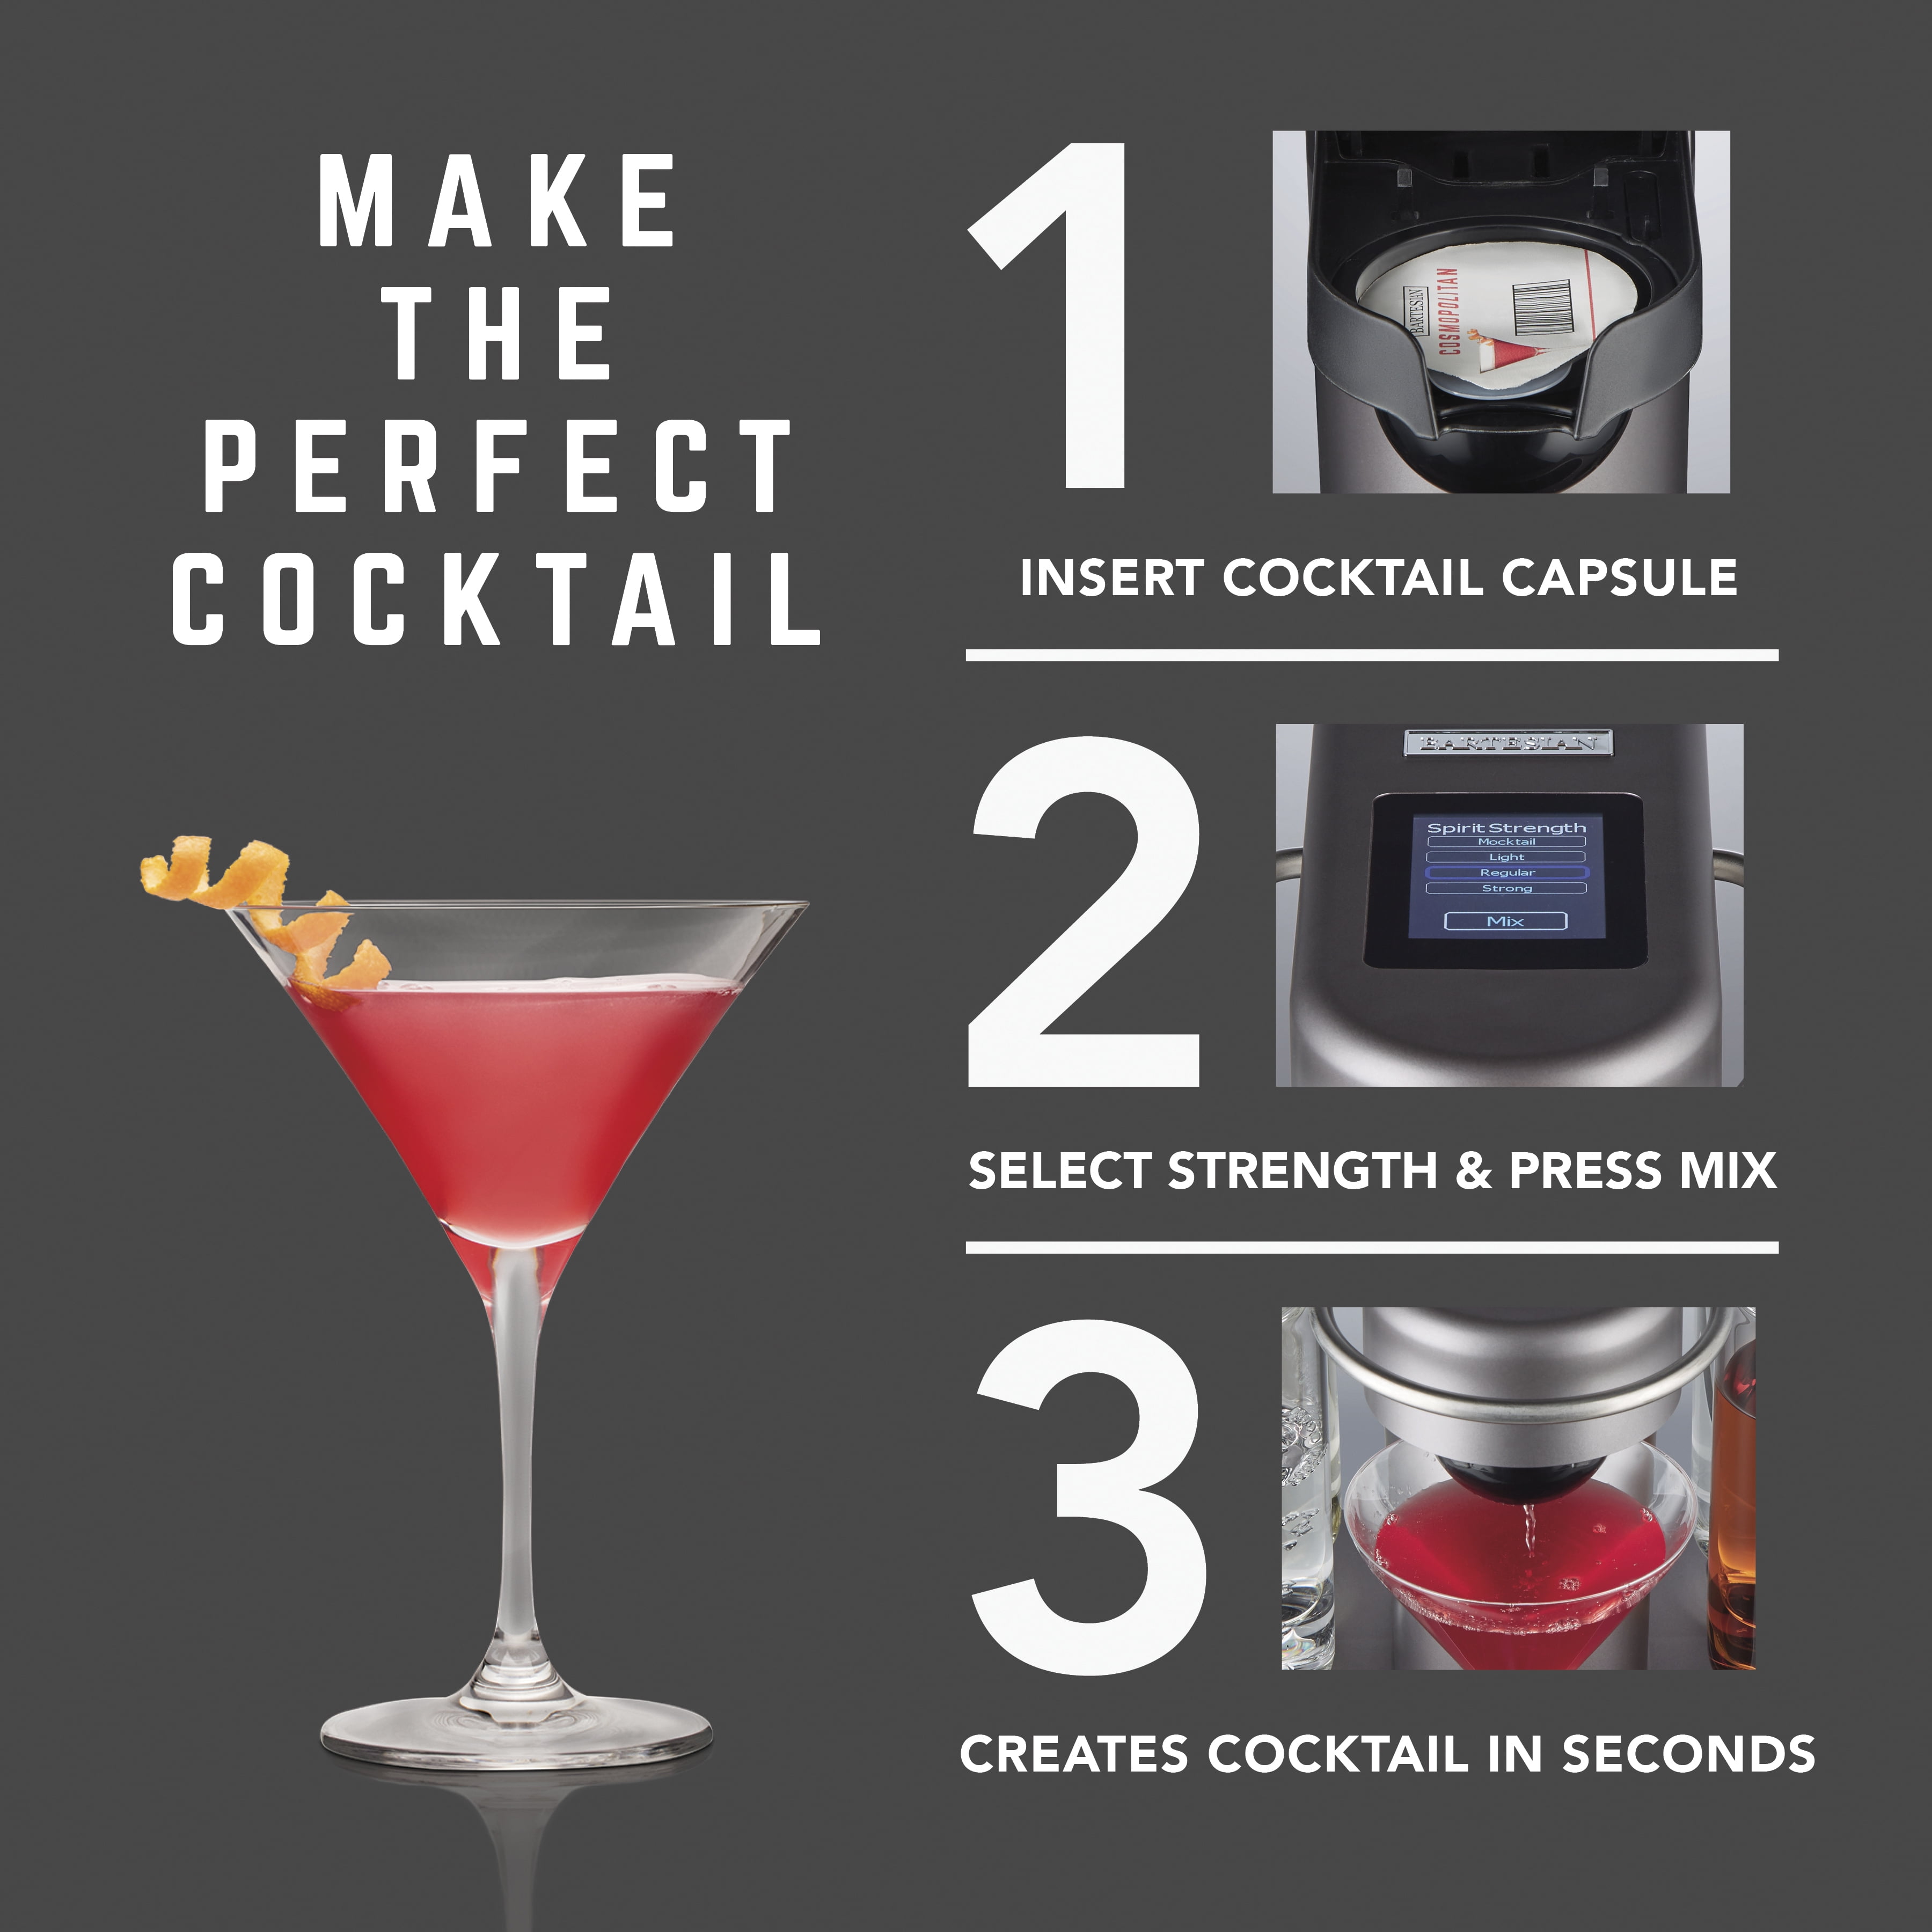 Bartesian Premium Cocktail Shaker